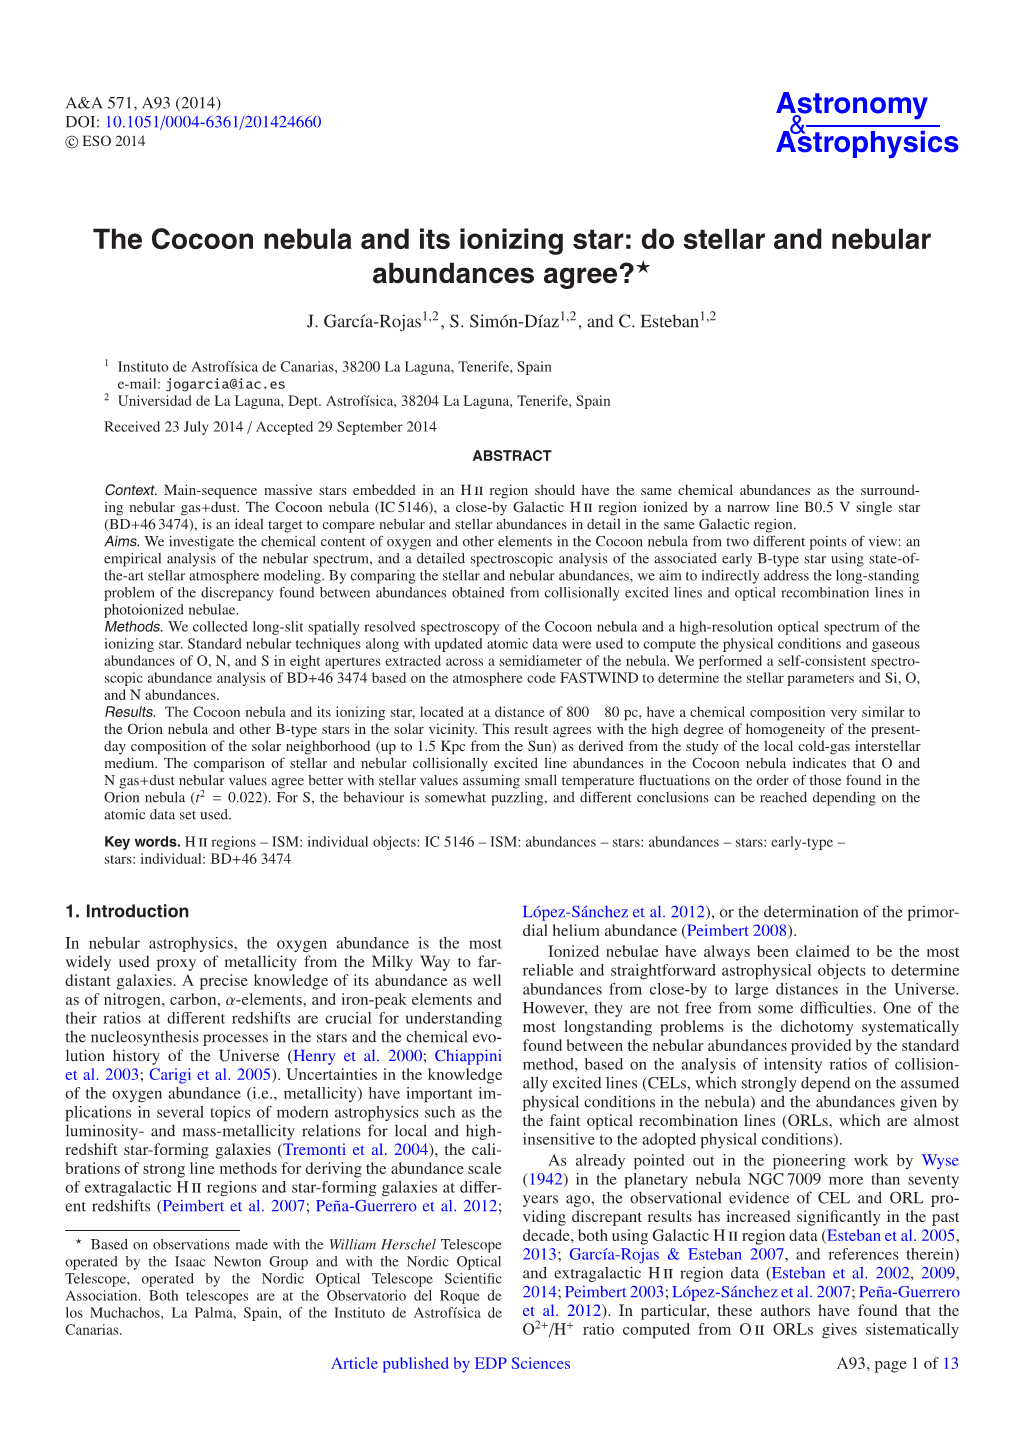 The Cocoon Nebula and Its Ionizing Star: Do Stellar and Nebular Abundances Agree?